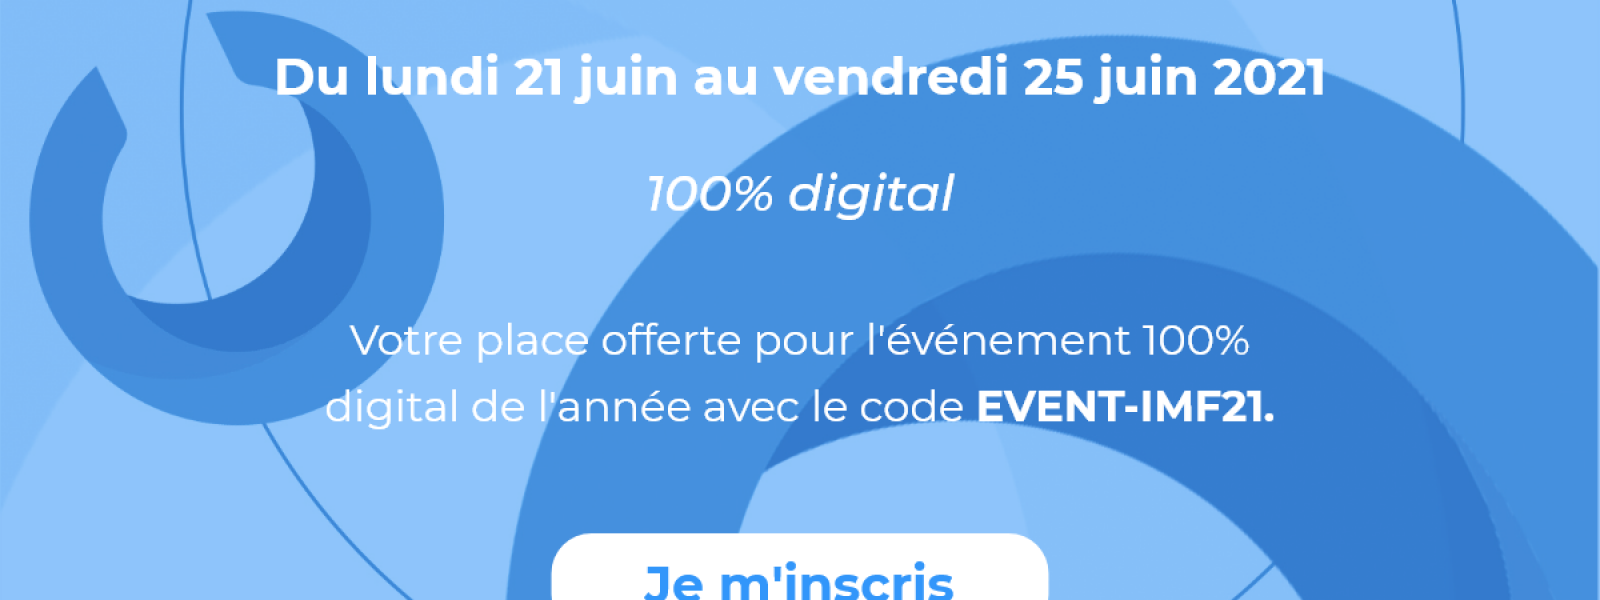 Bannière Inbound Marketing France 2021